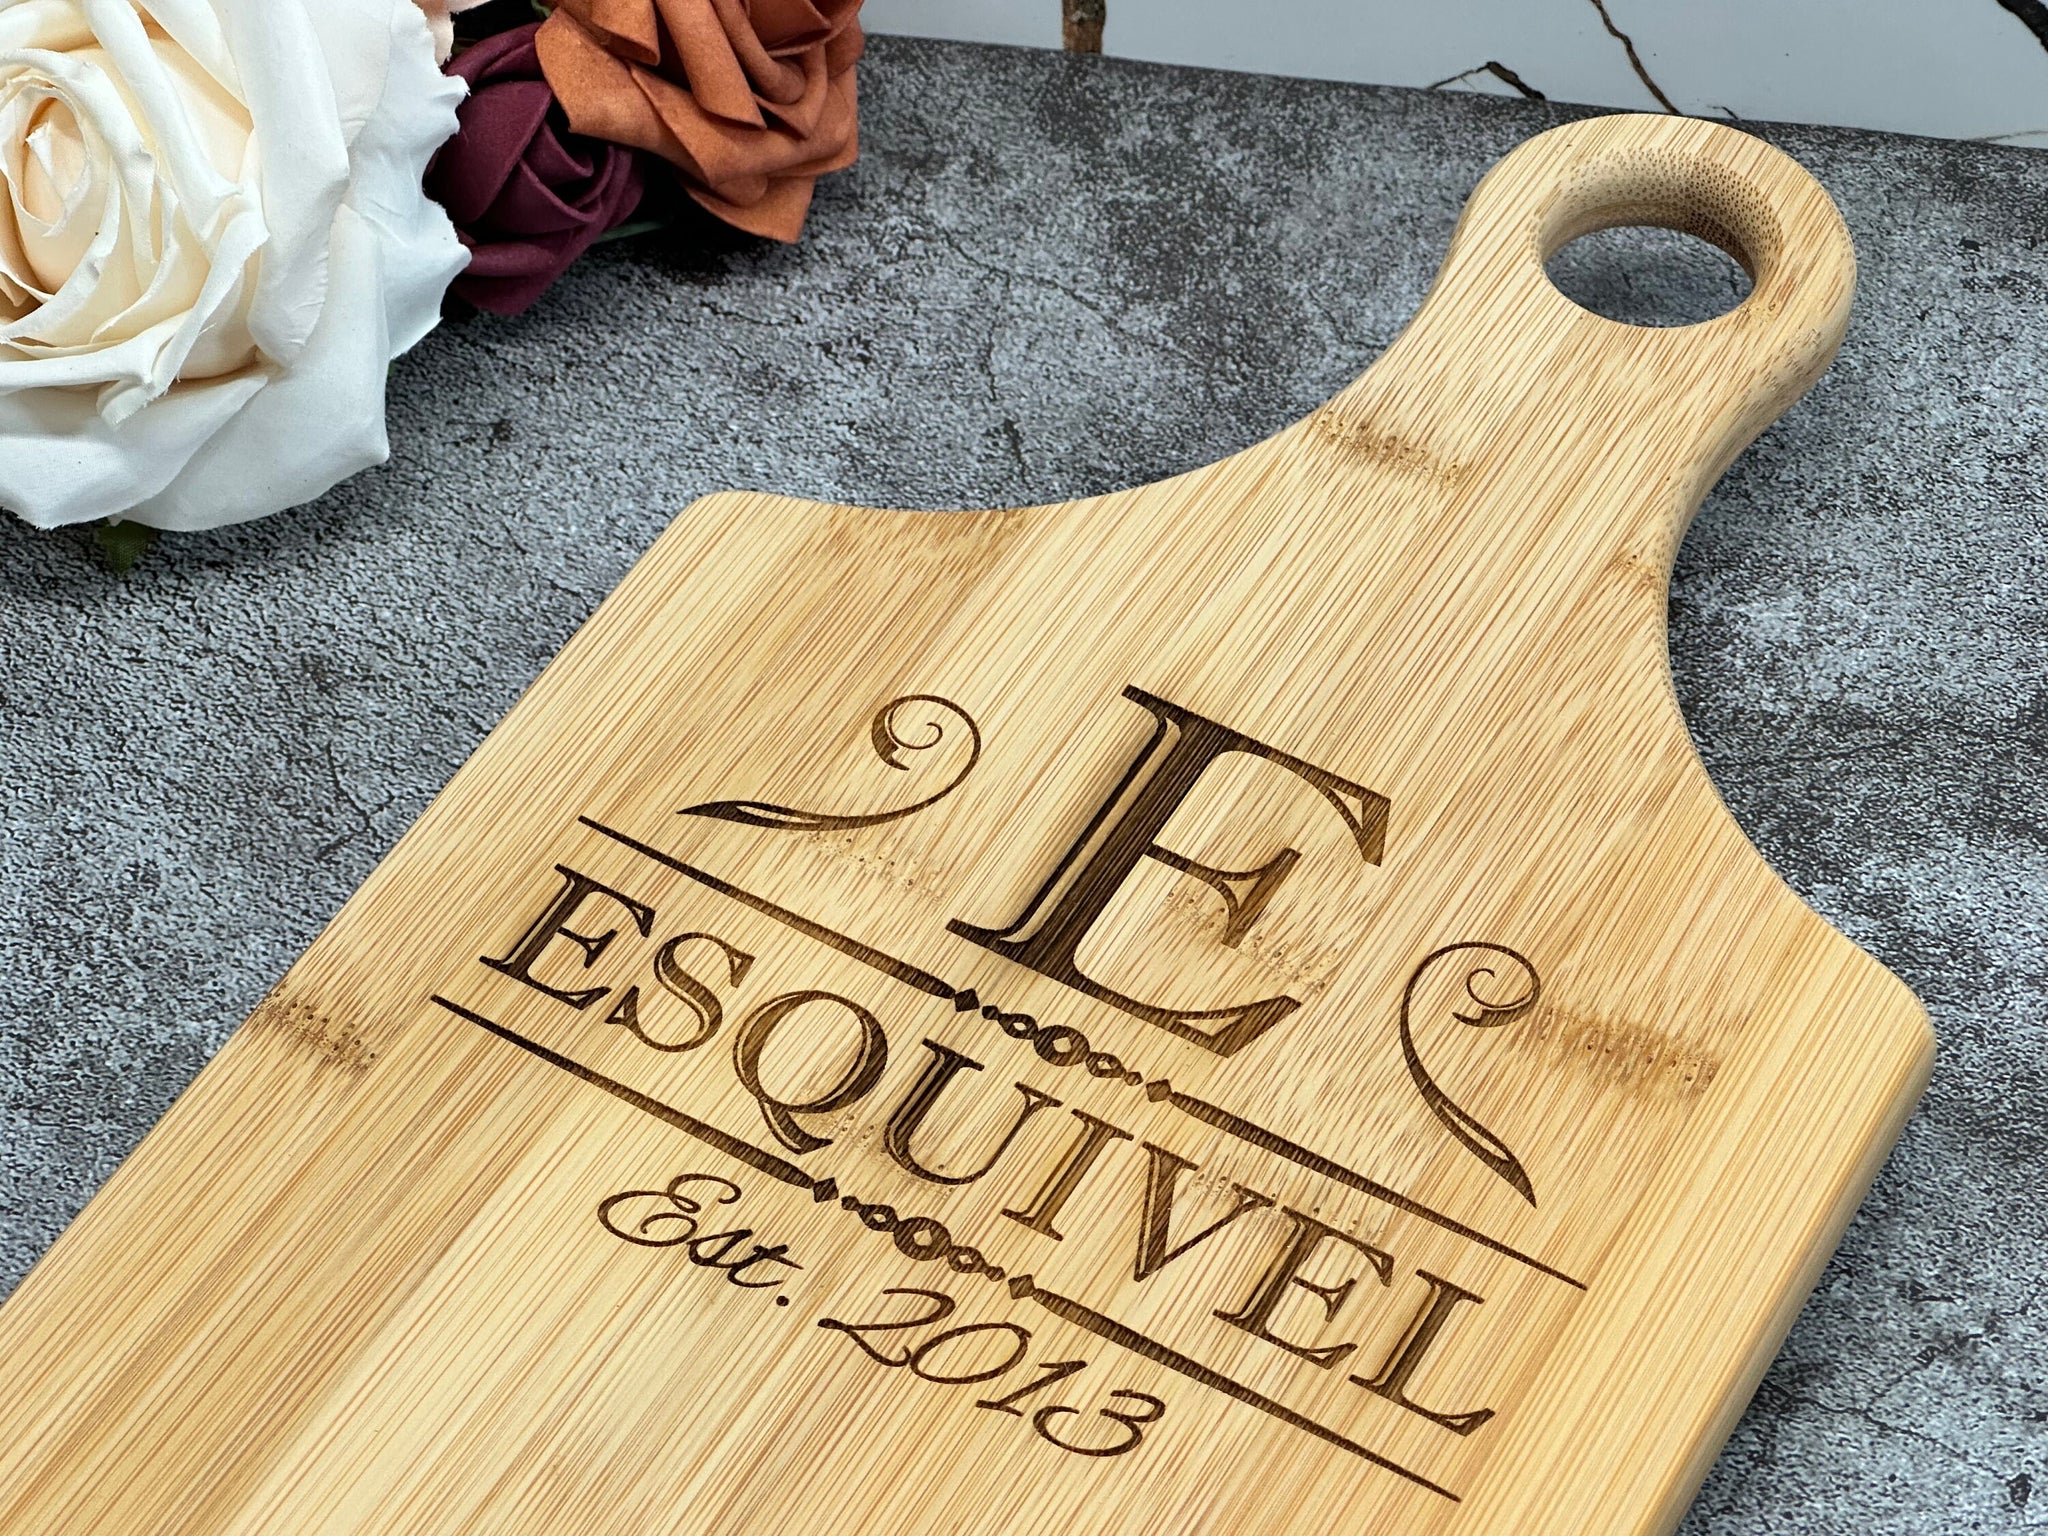 Personalized Cutting board, Paddle-shaped, housewarming gift